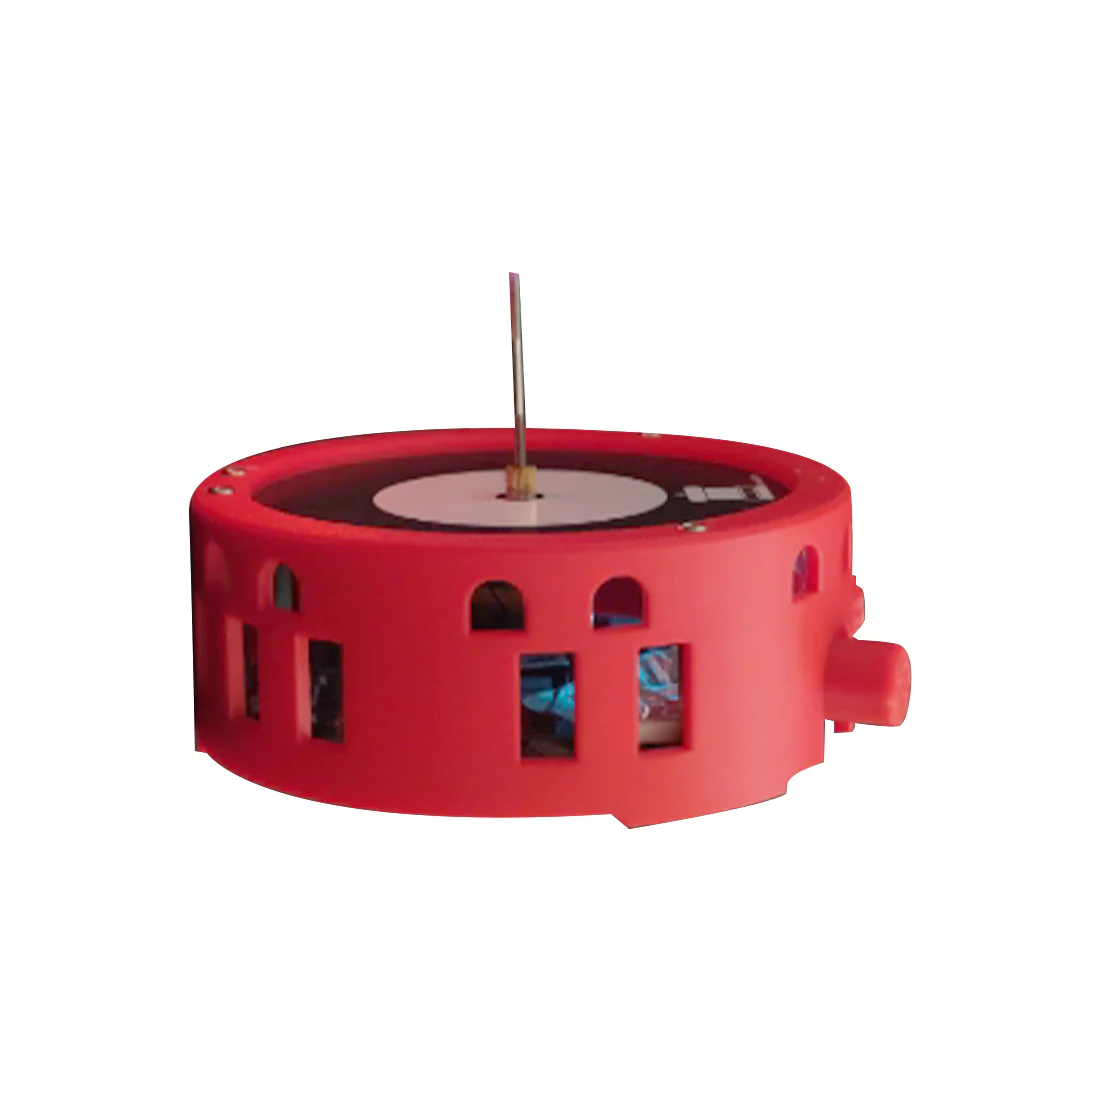 Bluetooth Mini SSTC Tesla Coil Musical Artificial Lightning -Red&Black (US Plug and EU Plug) 1